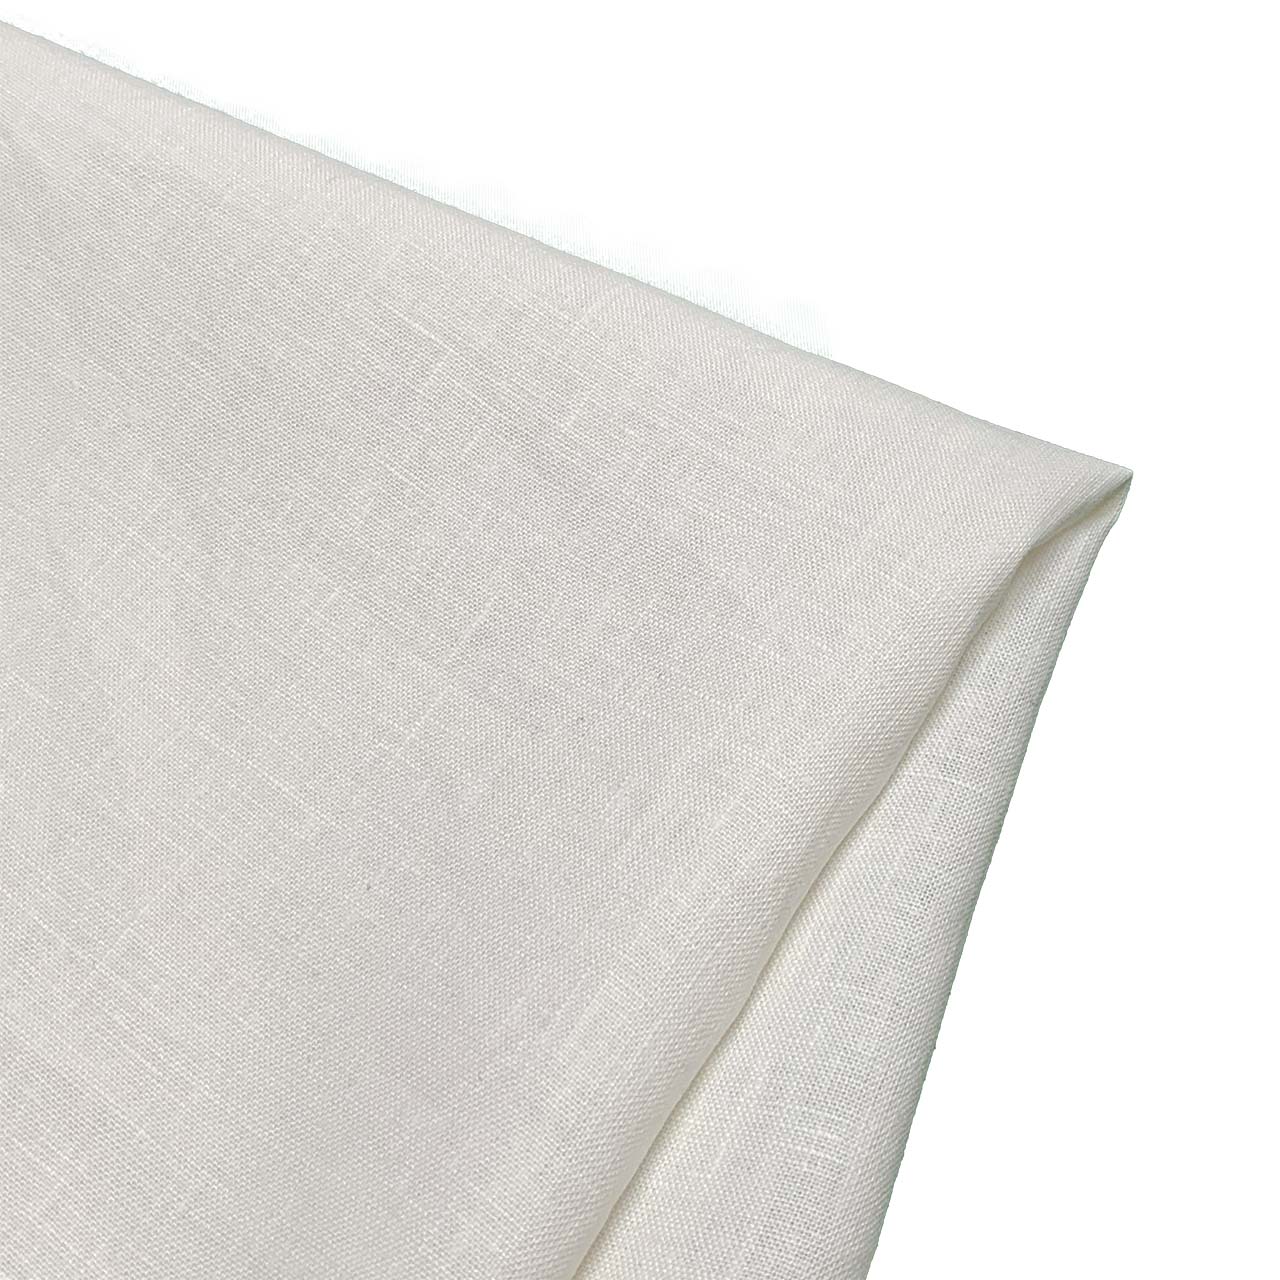 linen fabric heavy weight white linen - moda linen fabric collection